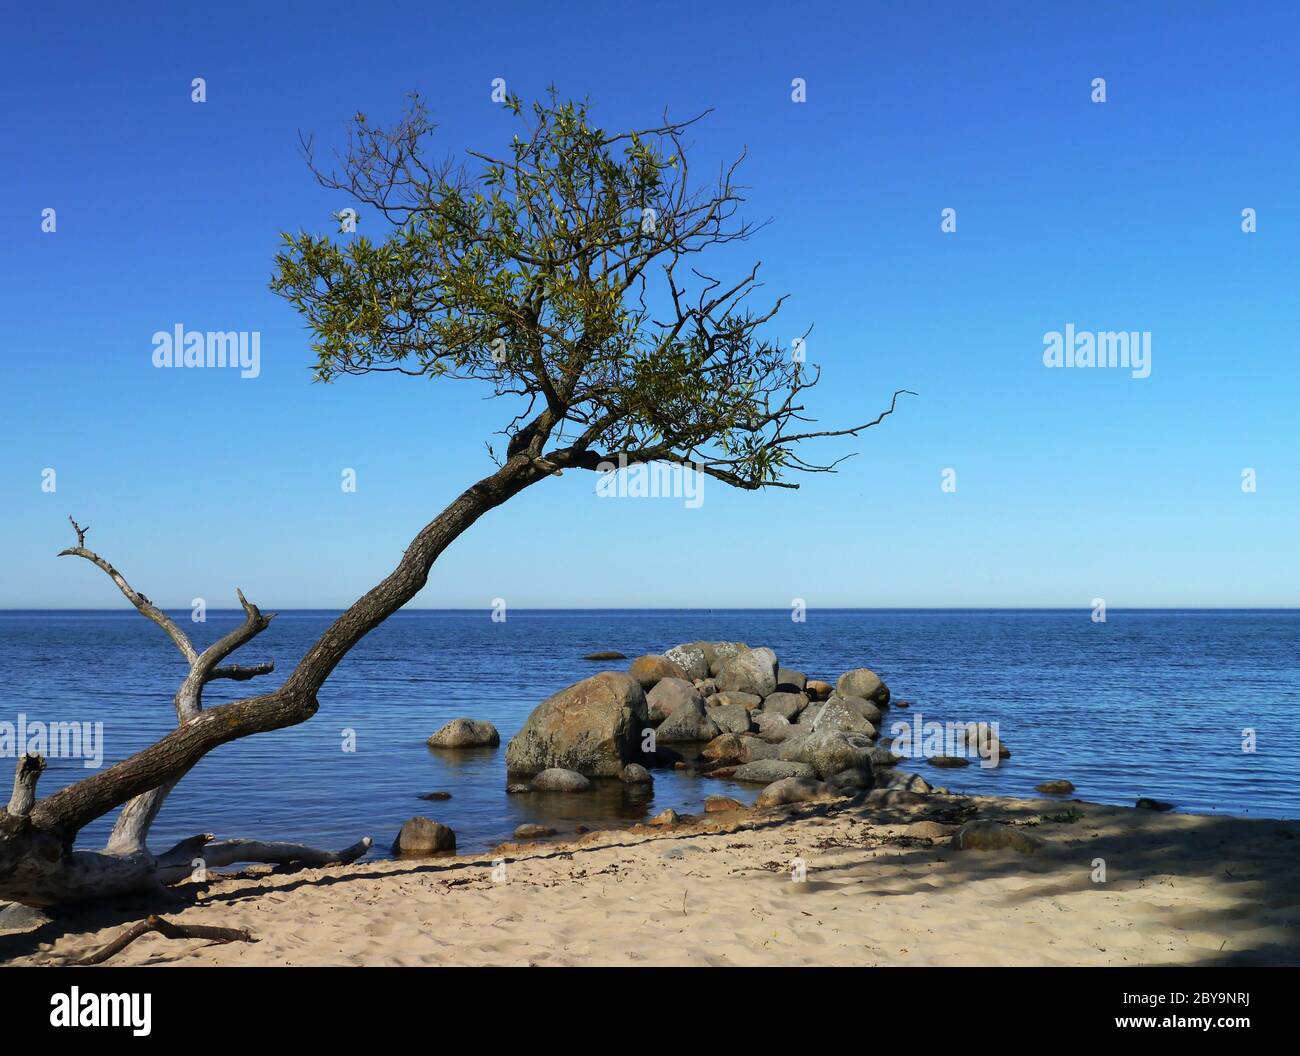 beach in sweden Stock Photo